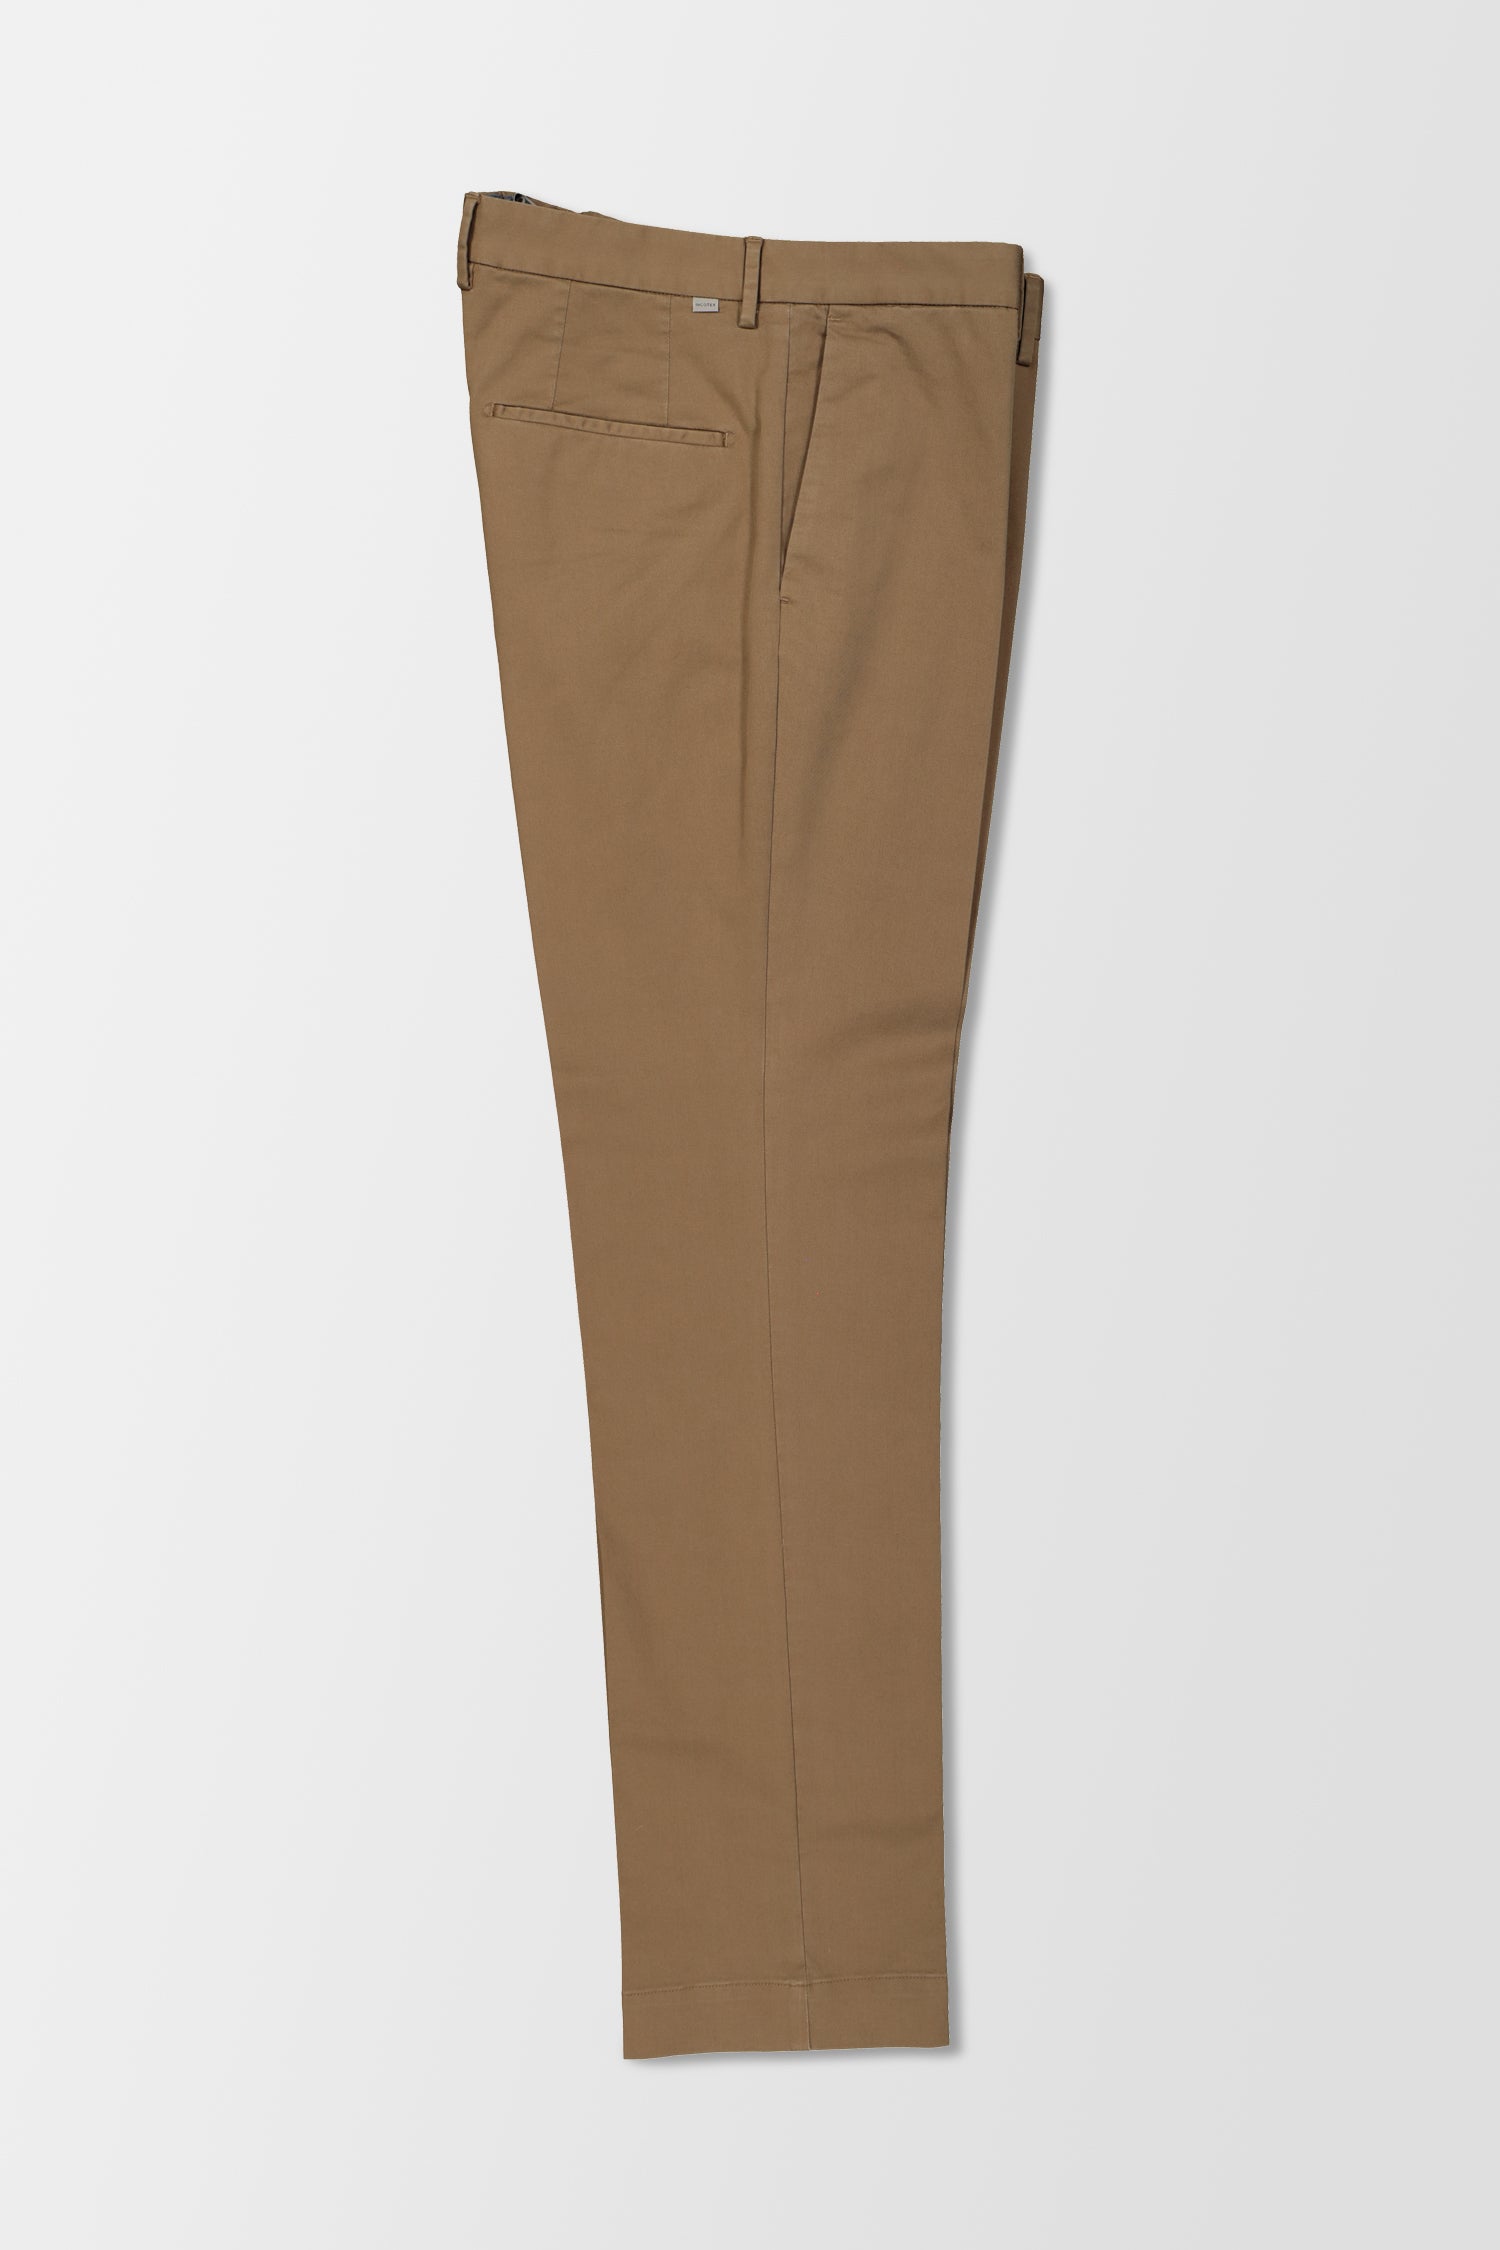 Incotex Brown Trousers